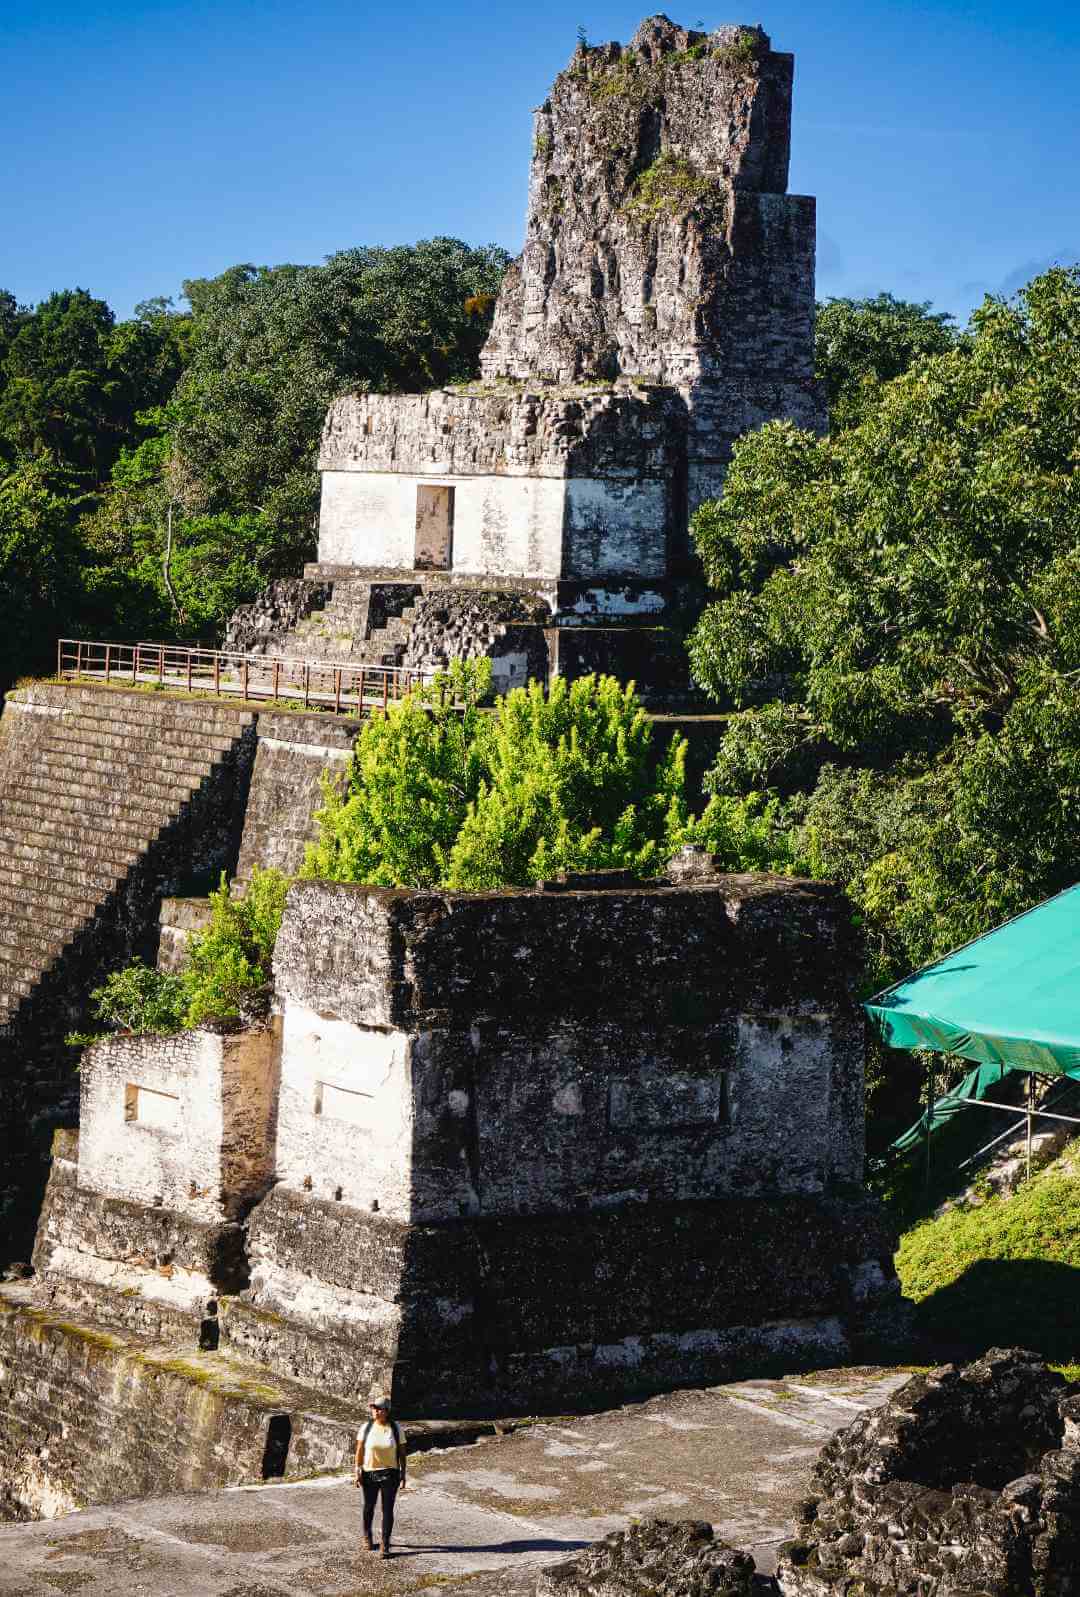 Zona arqueológica maya en el departamento del Petén